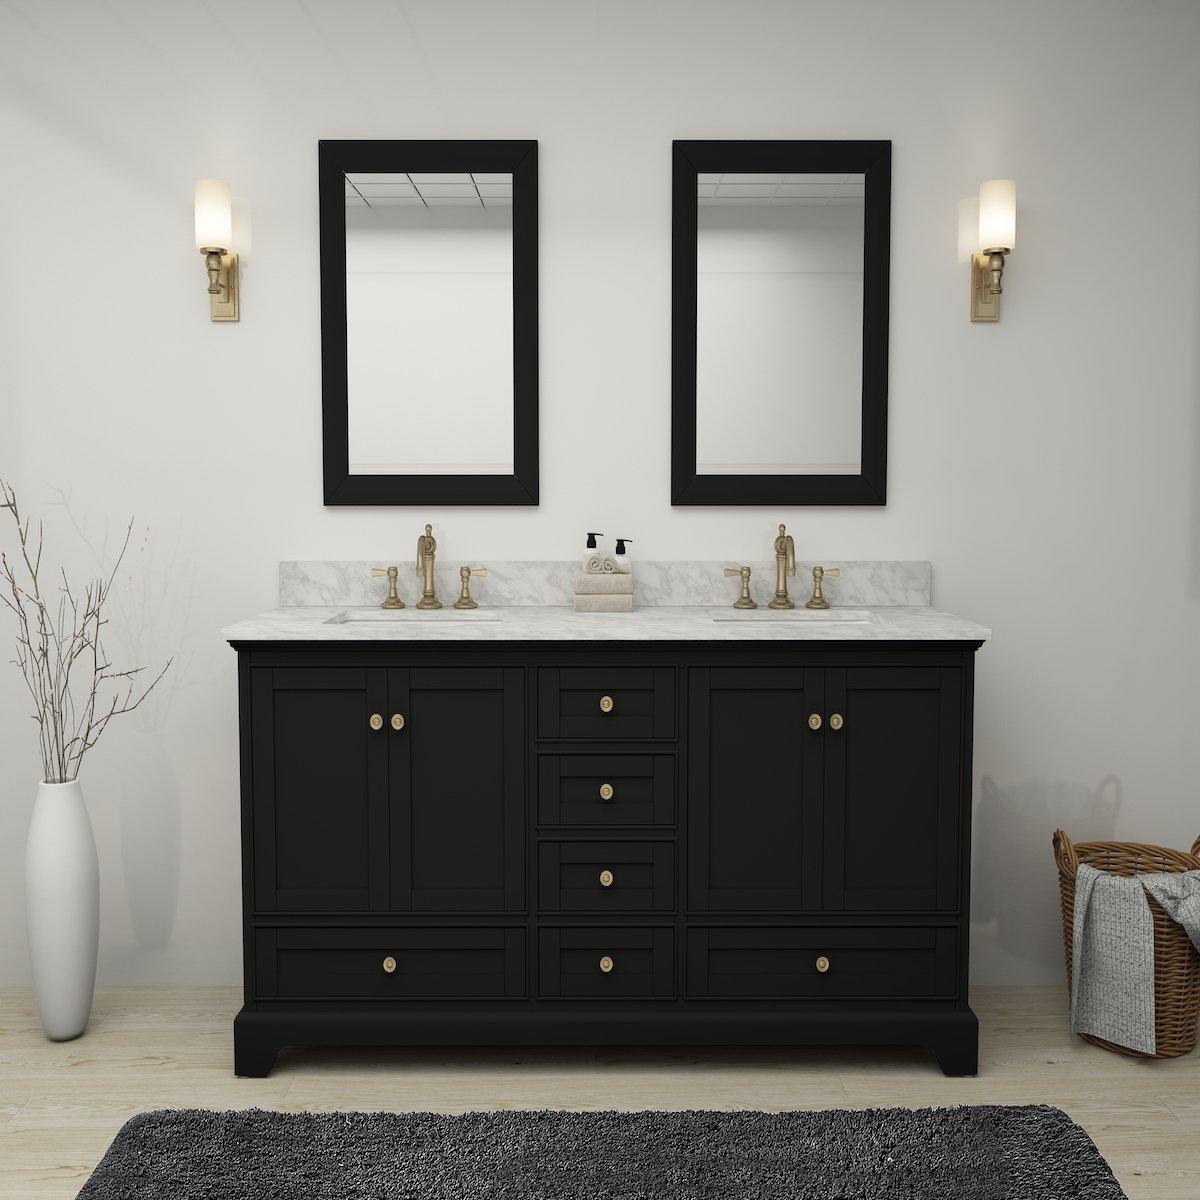 Ancerre Designs Audrey 72 Inch Onyx Black Double Vanity in Bathroom